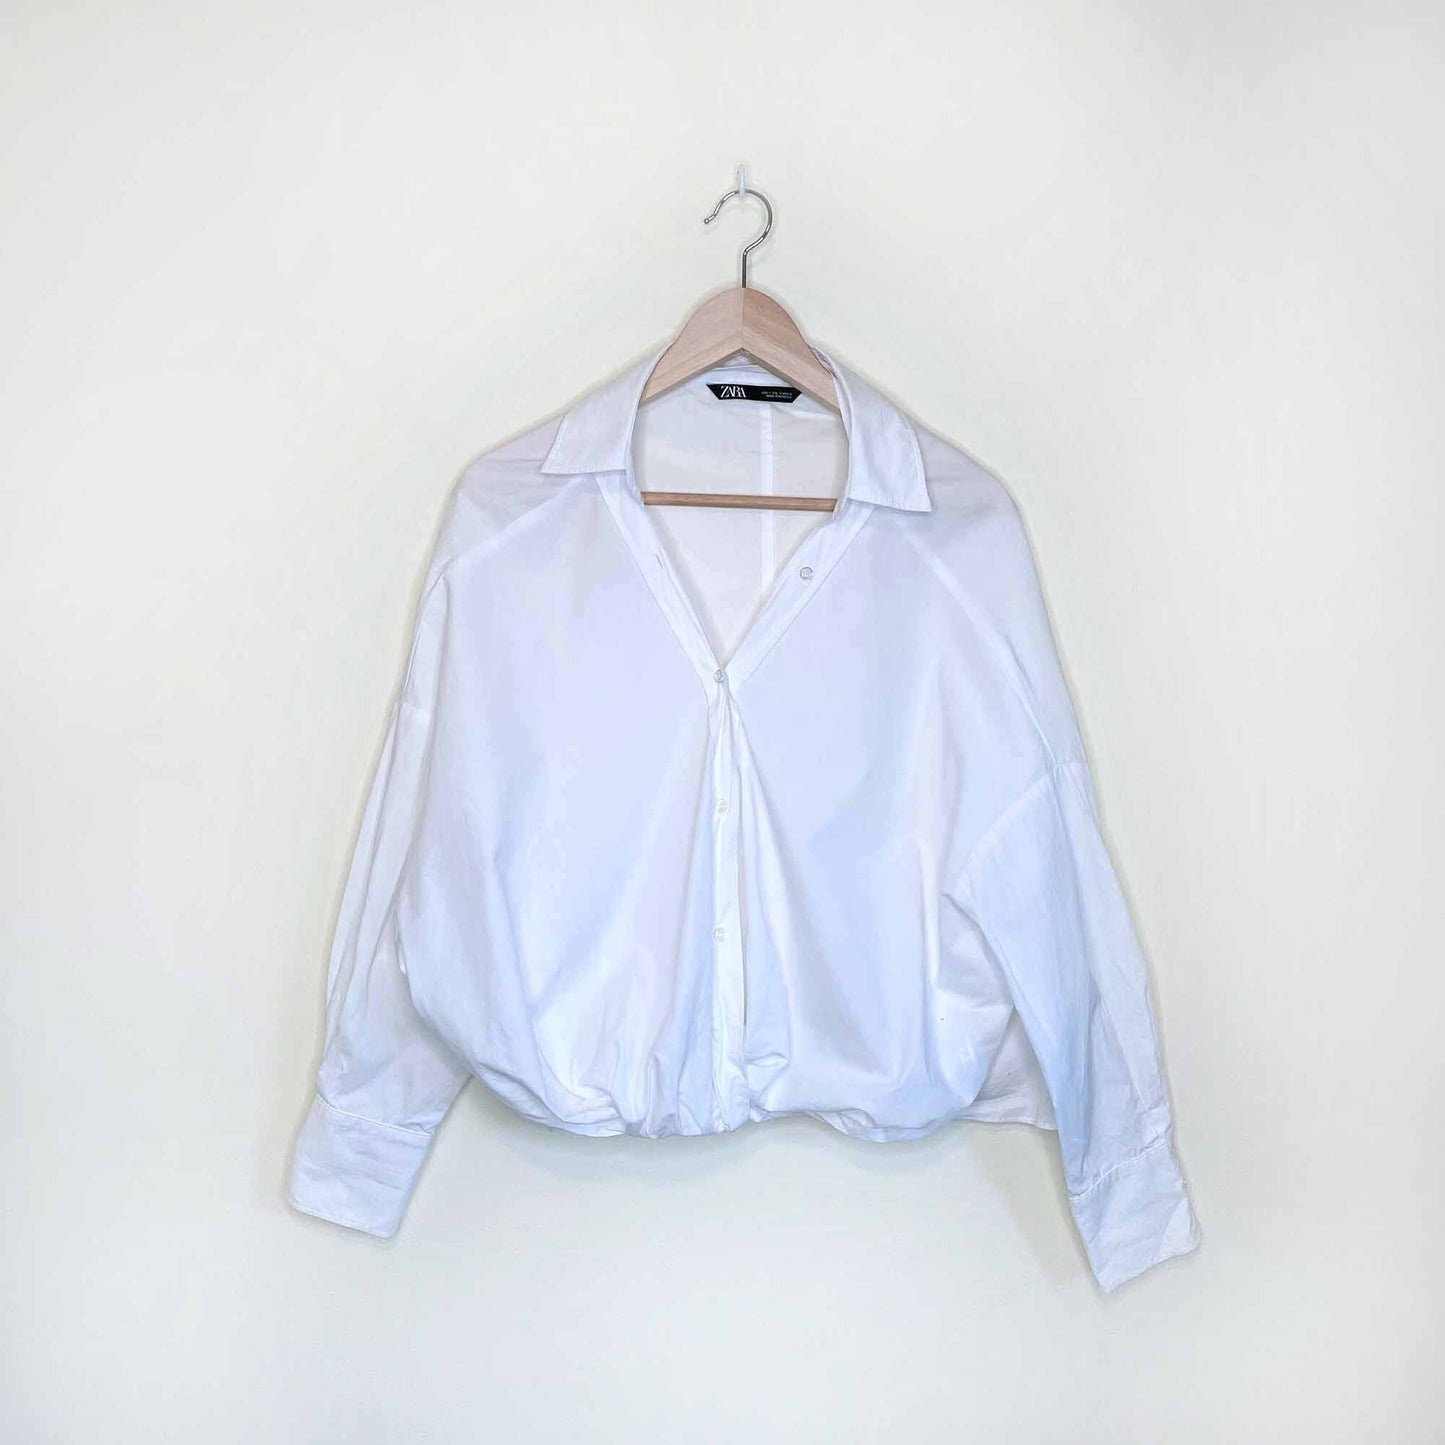 zara oversized white button down dress shirt - size small